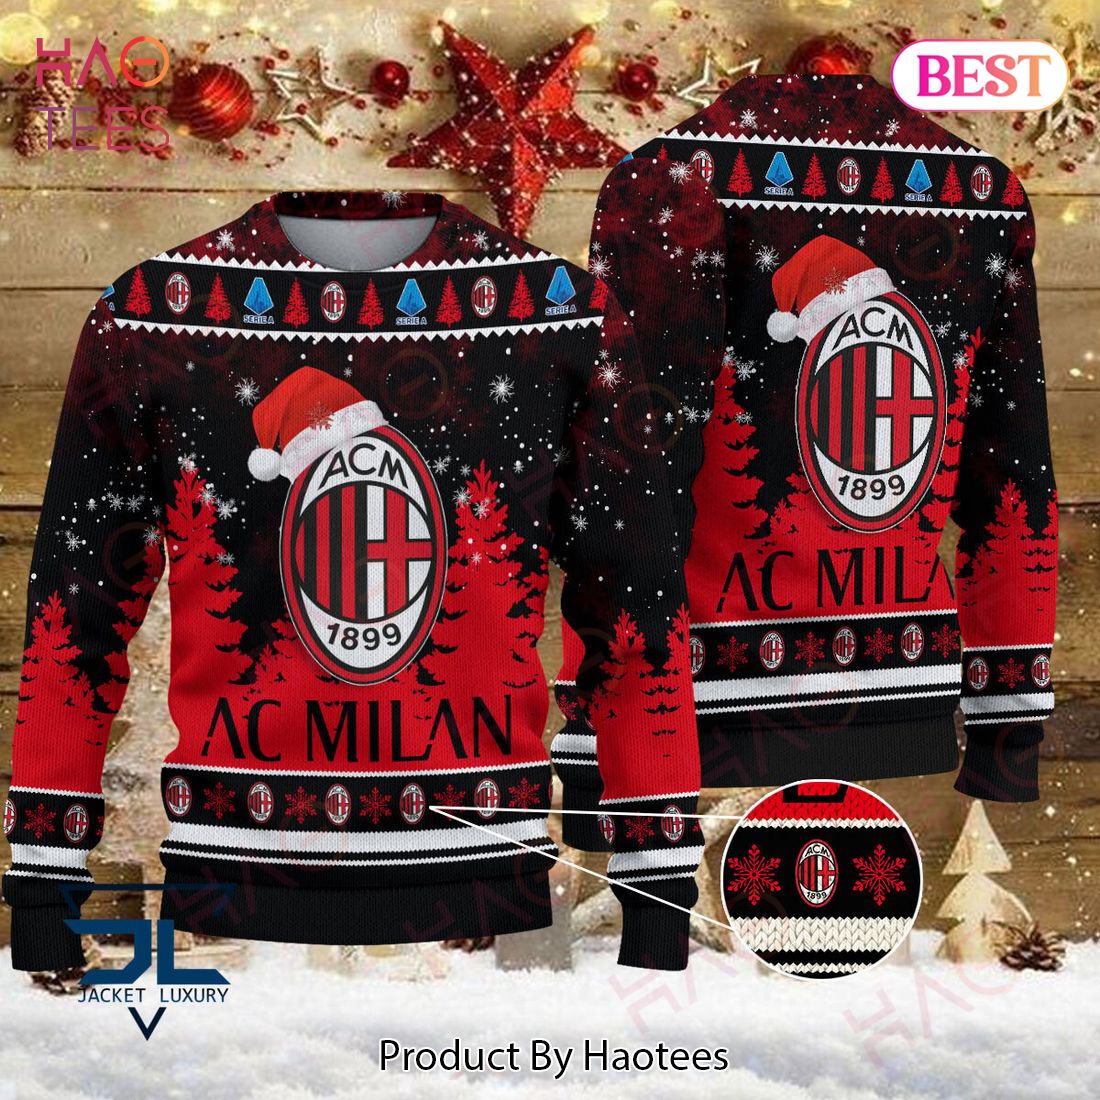 AC Milan ACM 1899  Luxury Brand Sweater Limited Edition